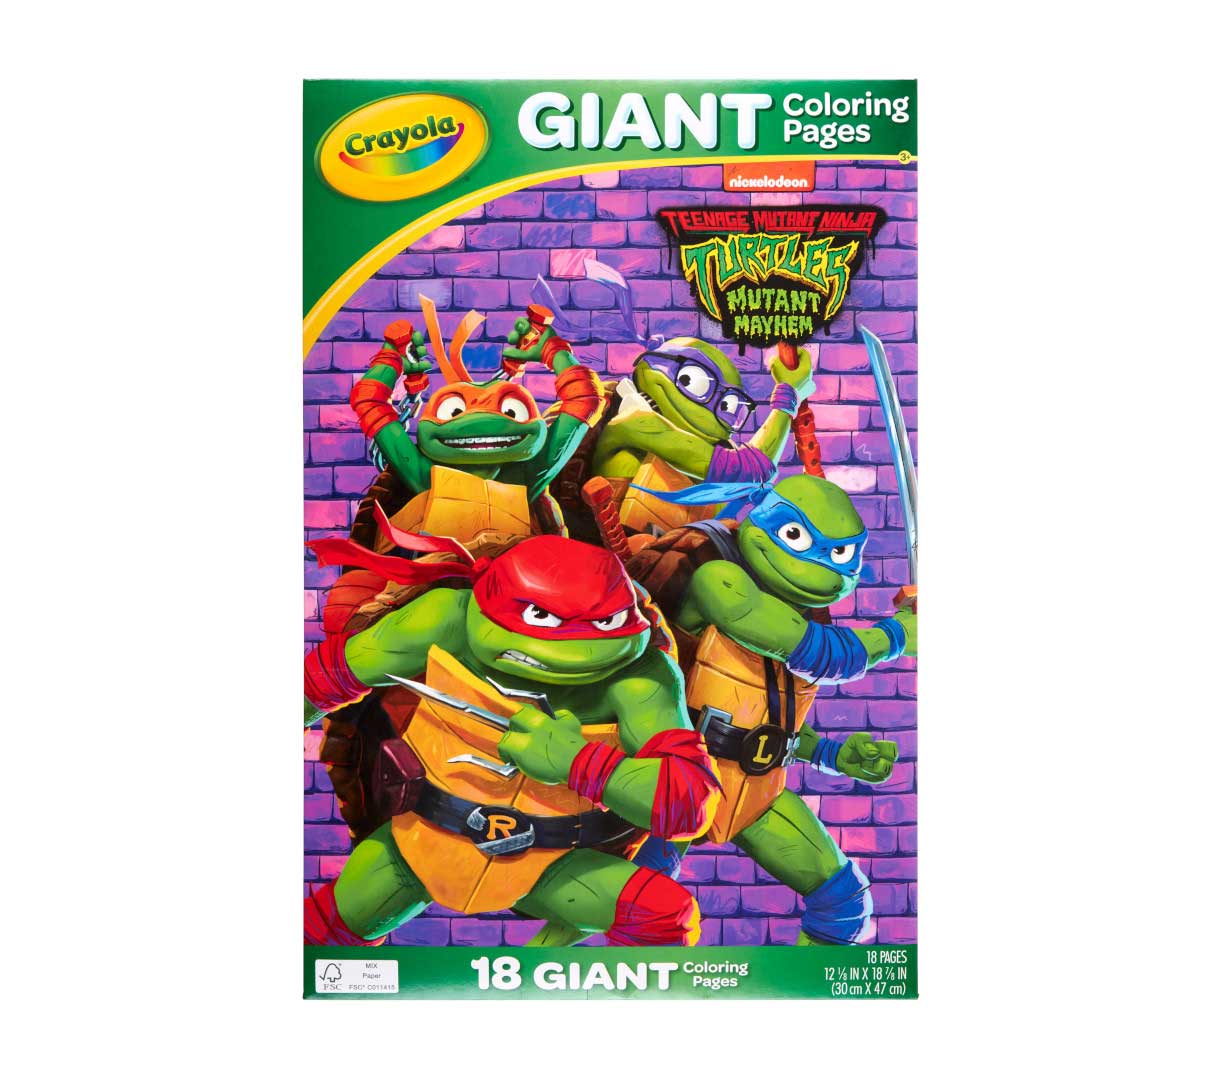 https://shop.crayola.com/on/demandware.static/-/Sites-crayola-storefront/default/dwde951455/images/04-2785-0-200_Teenage-Mutant-Ninja-Turtles_Mutant-Mayhem_Giant-Coloring-Pages_F1.jpg